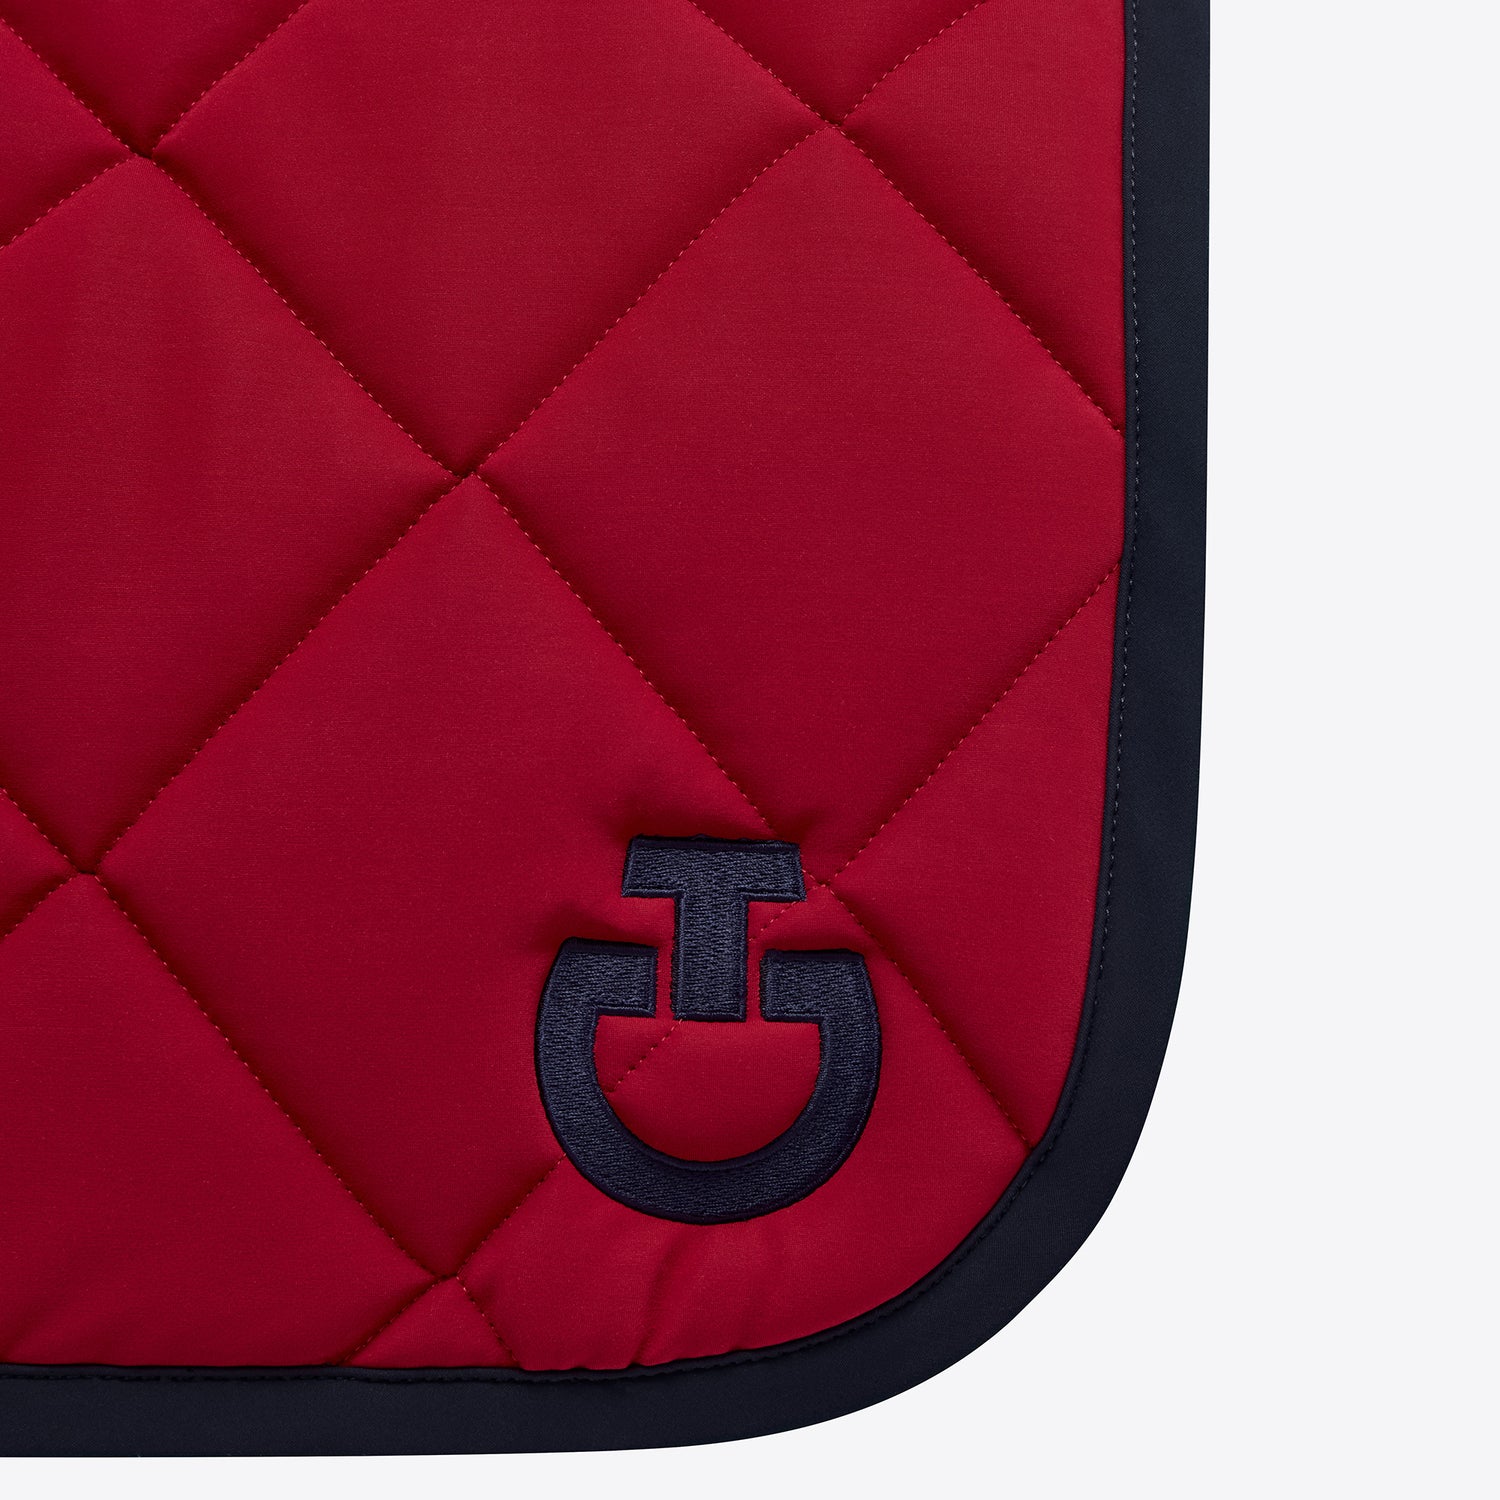 Red CT saddle blanket